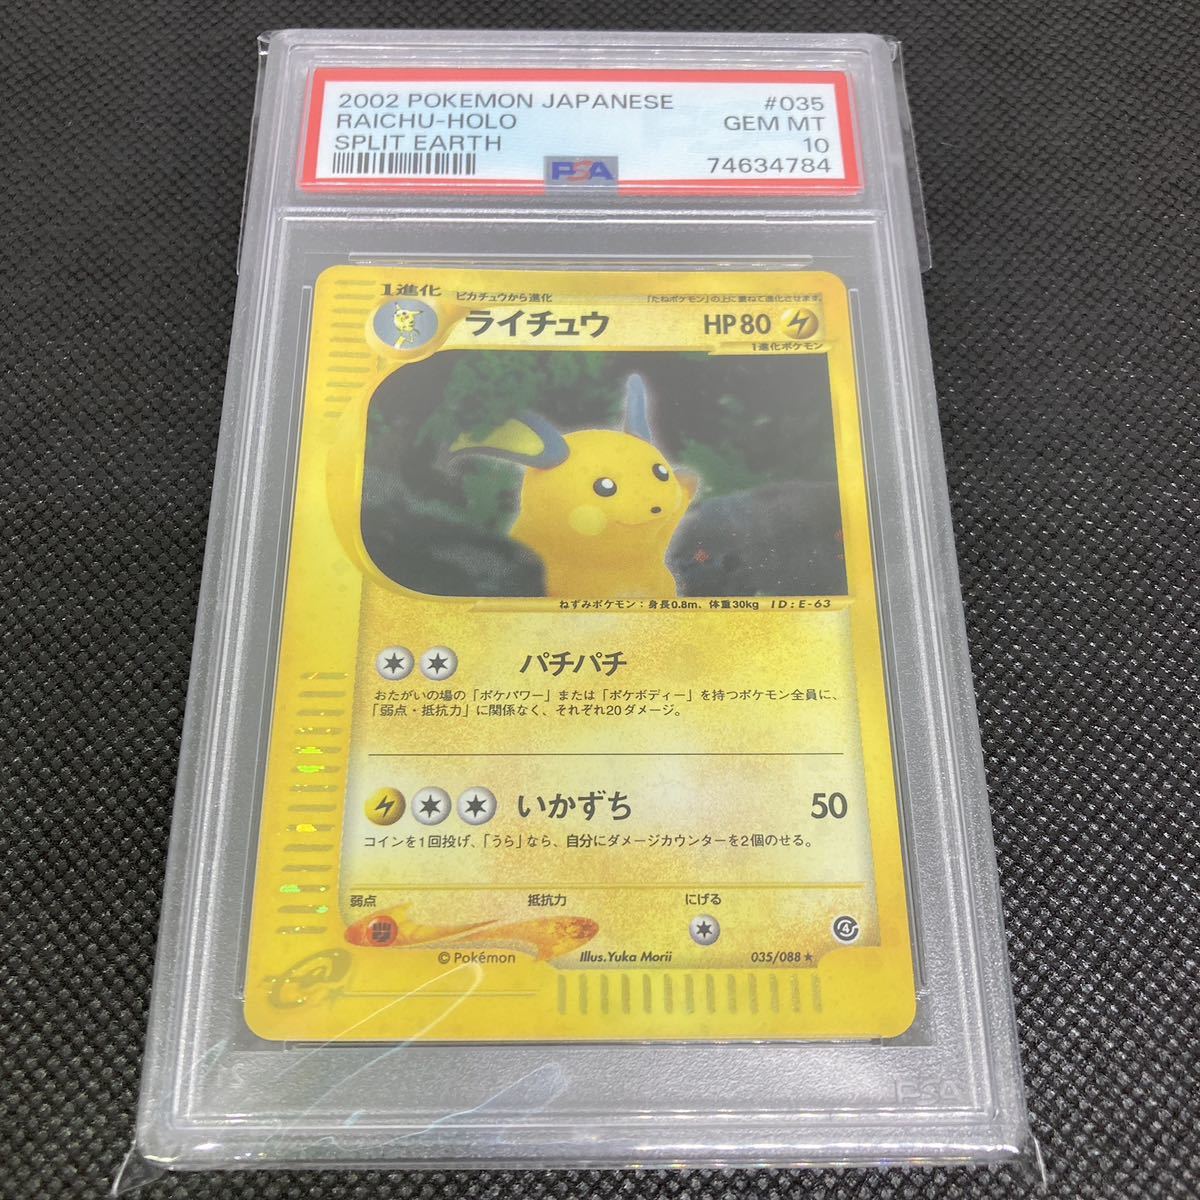 PSA10 ポケモンカードe 裂けた大地 ライチュウ アンリミ ホロ GEM MT 2002 PokemonCard Japanese Raichu Unlimited Holo Split Earth 1円〜